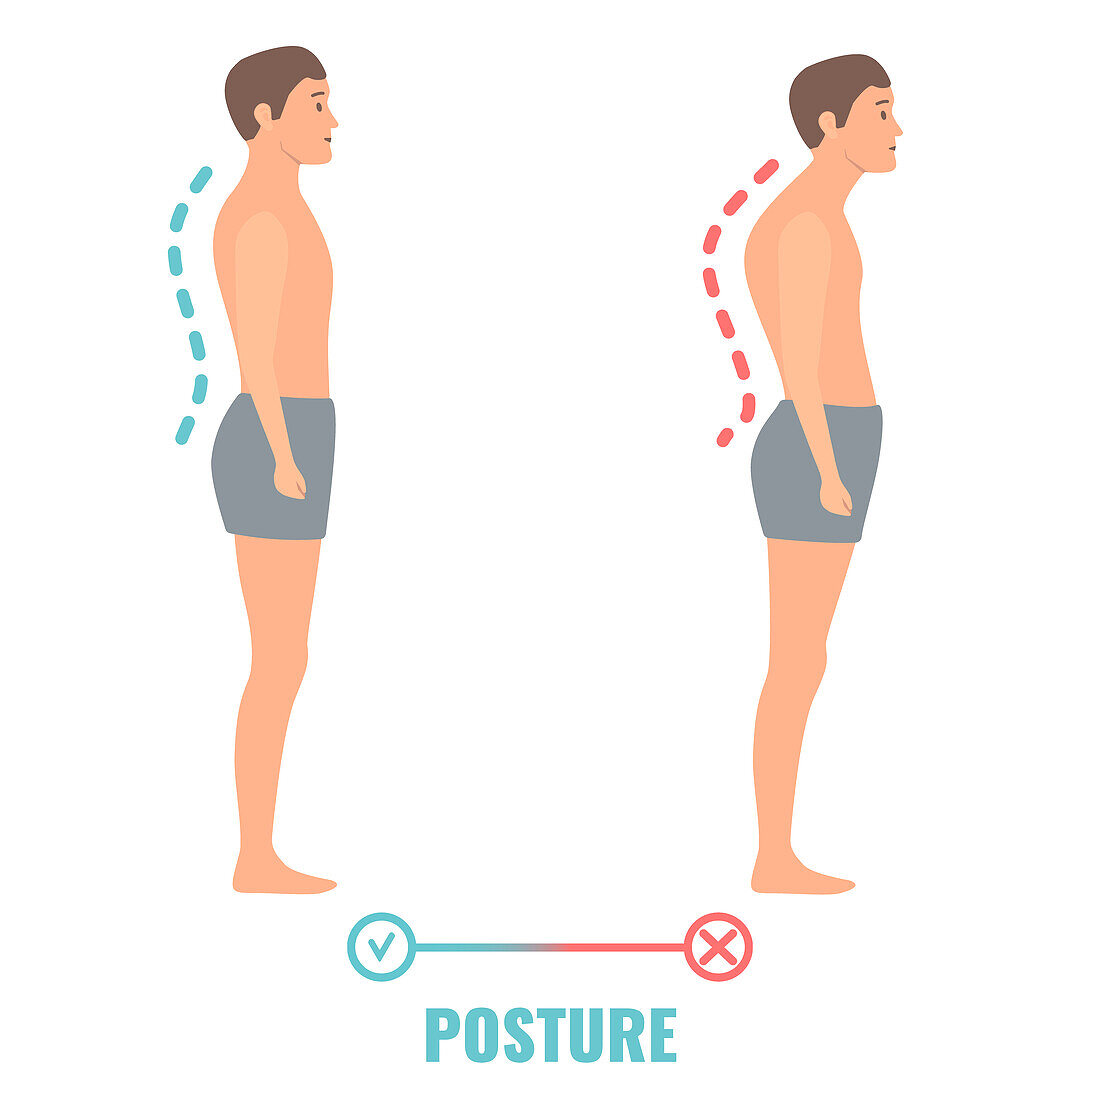 Good and bad posture, conceptual illustration